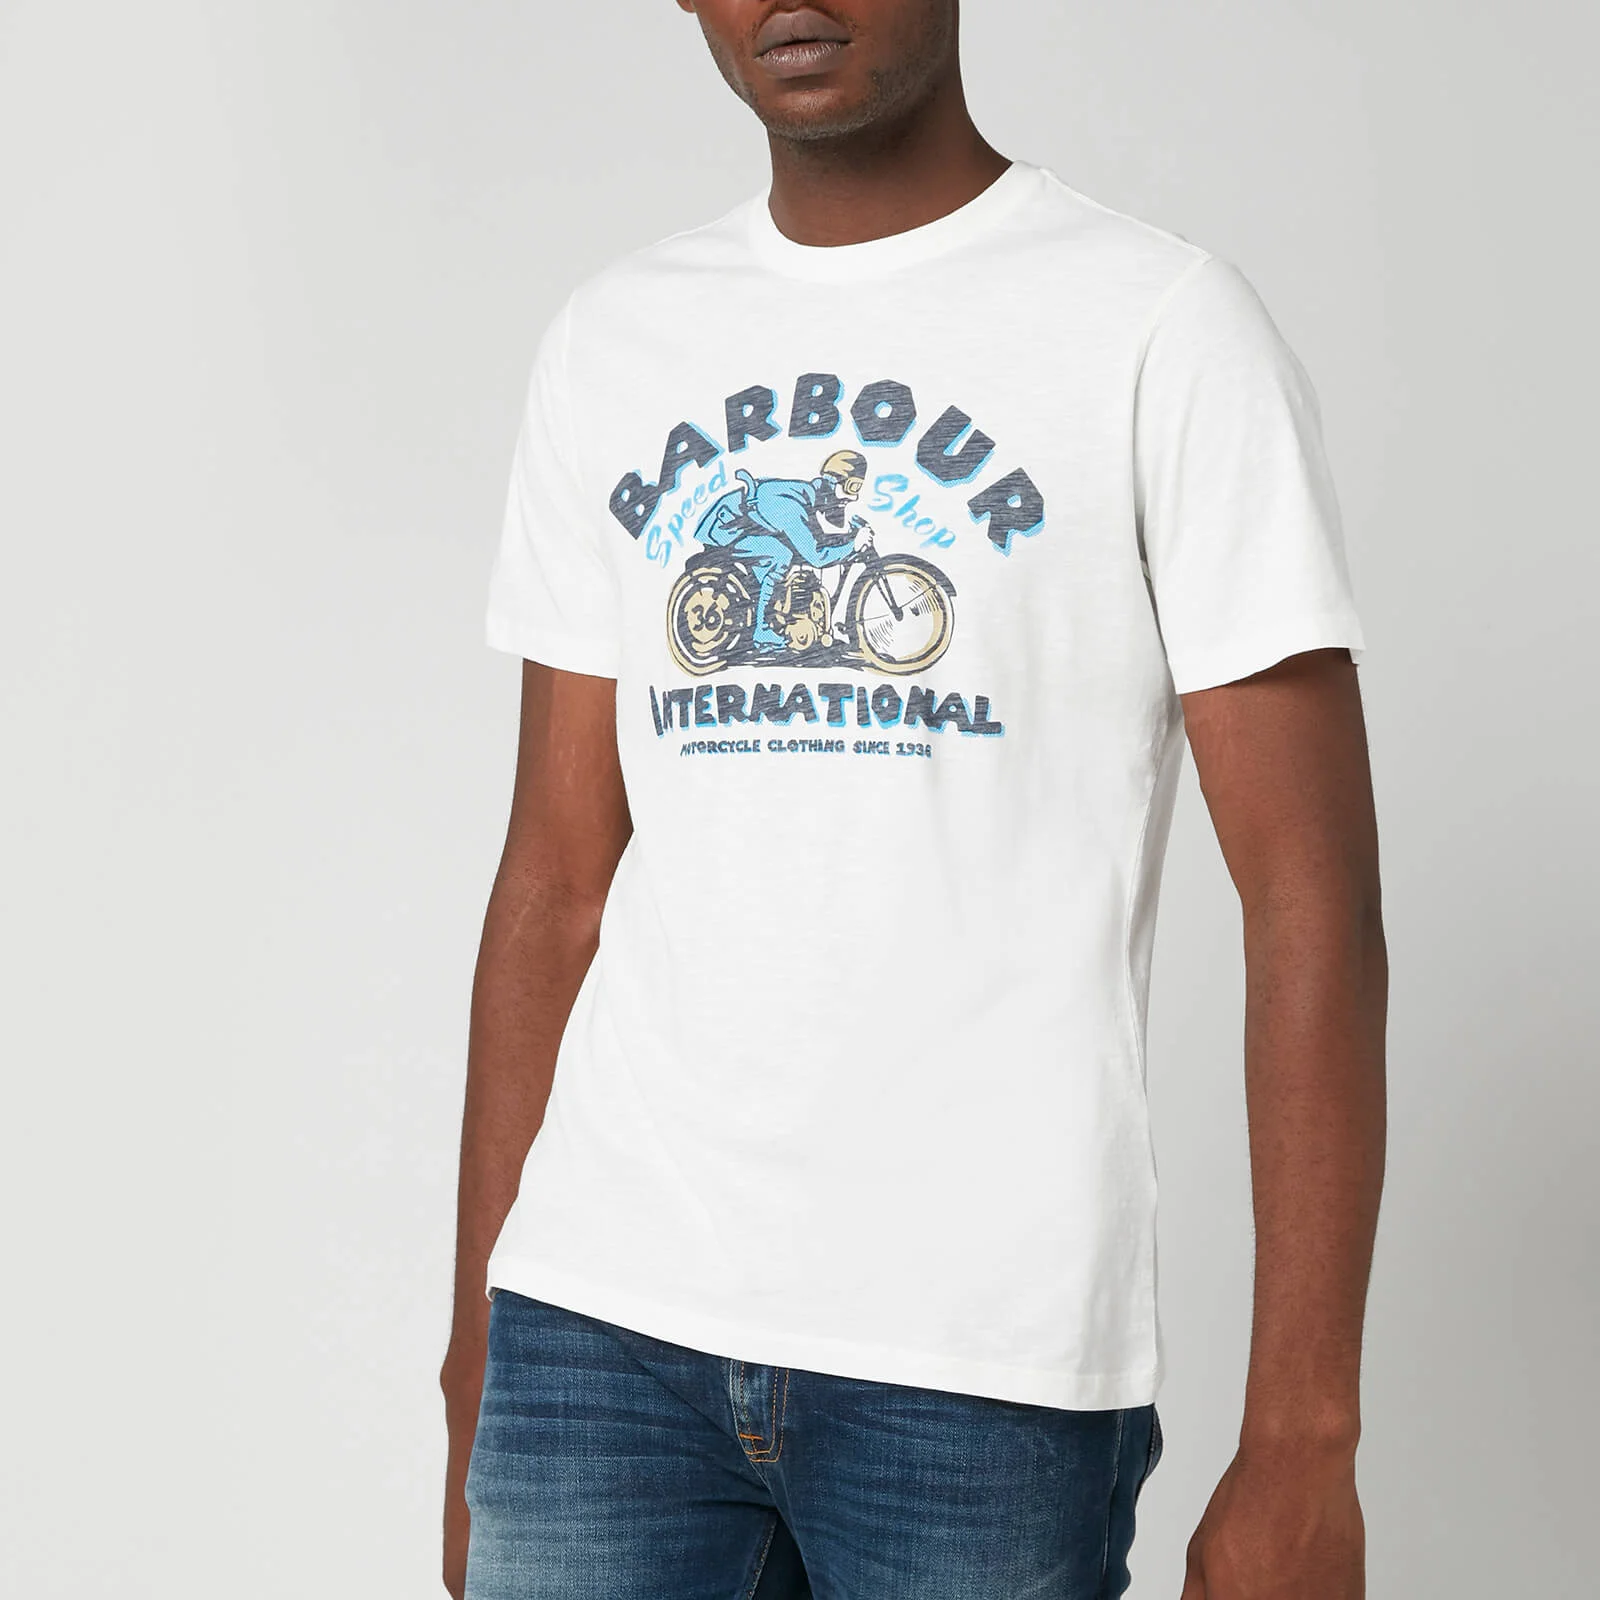 Barbour International Men's Device T-Shirt - Light Grey Image 1